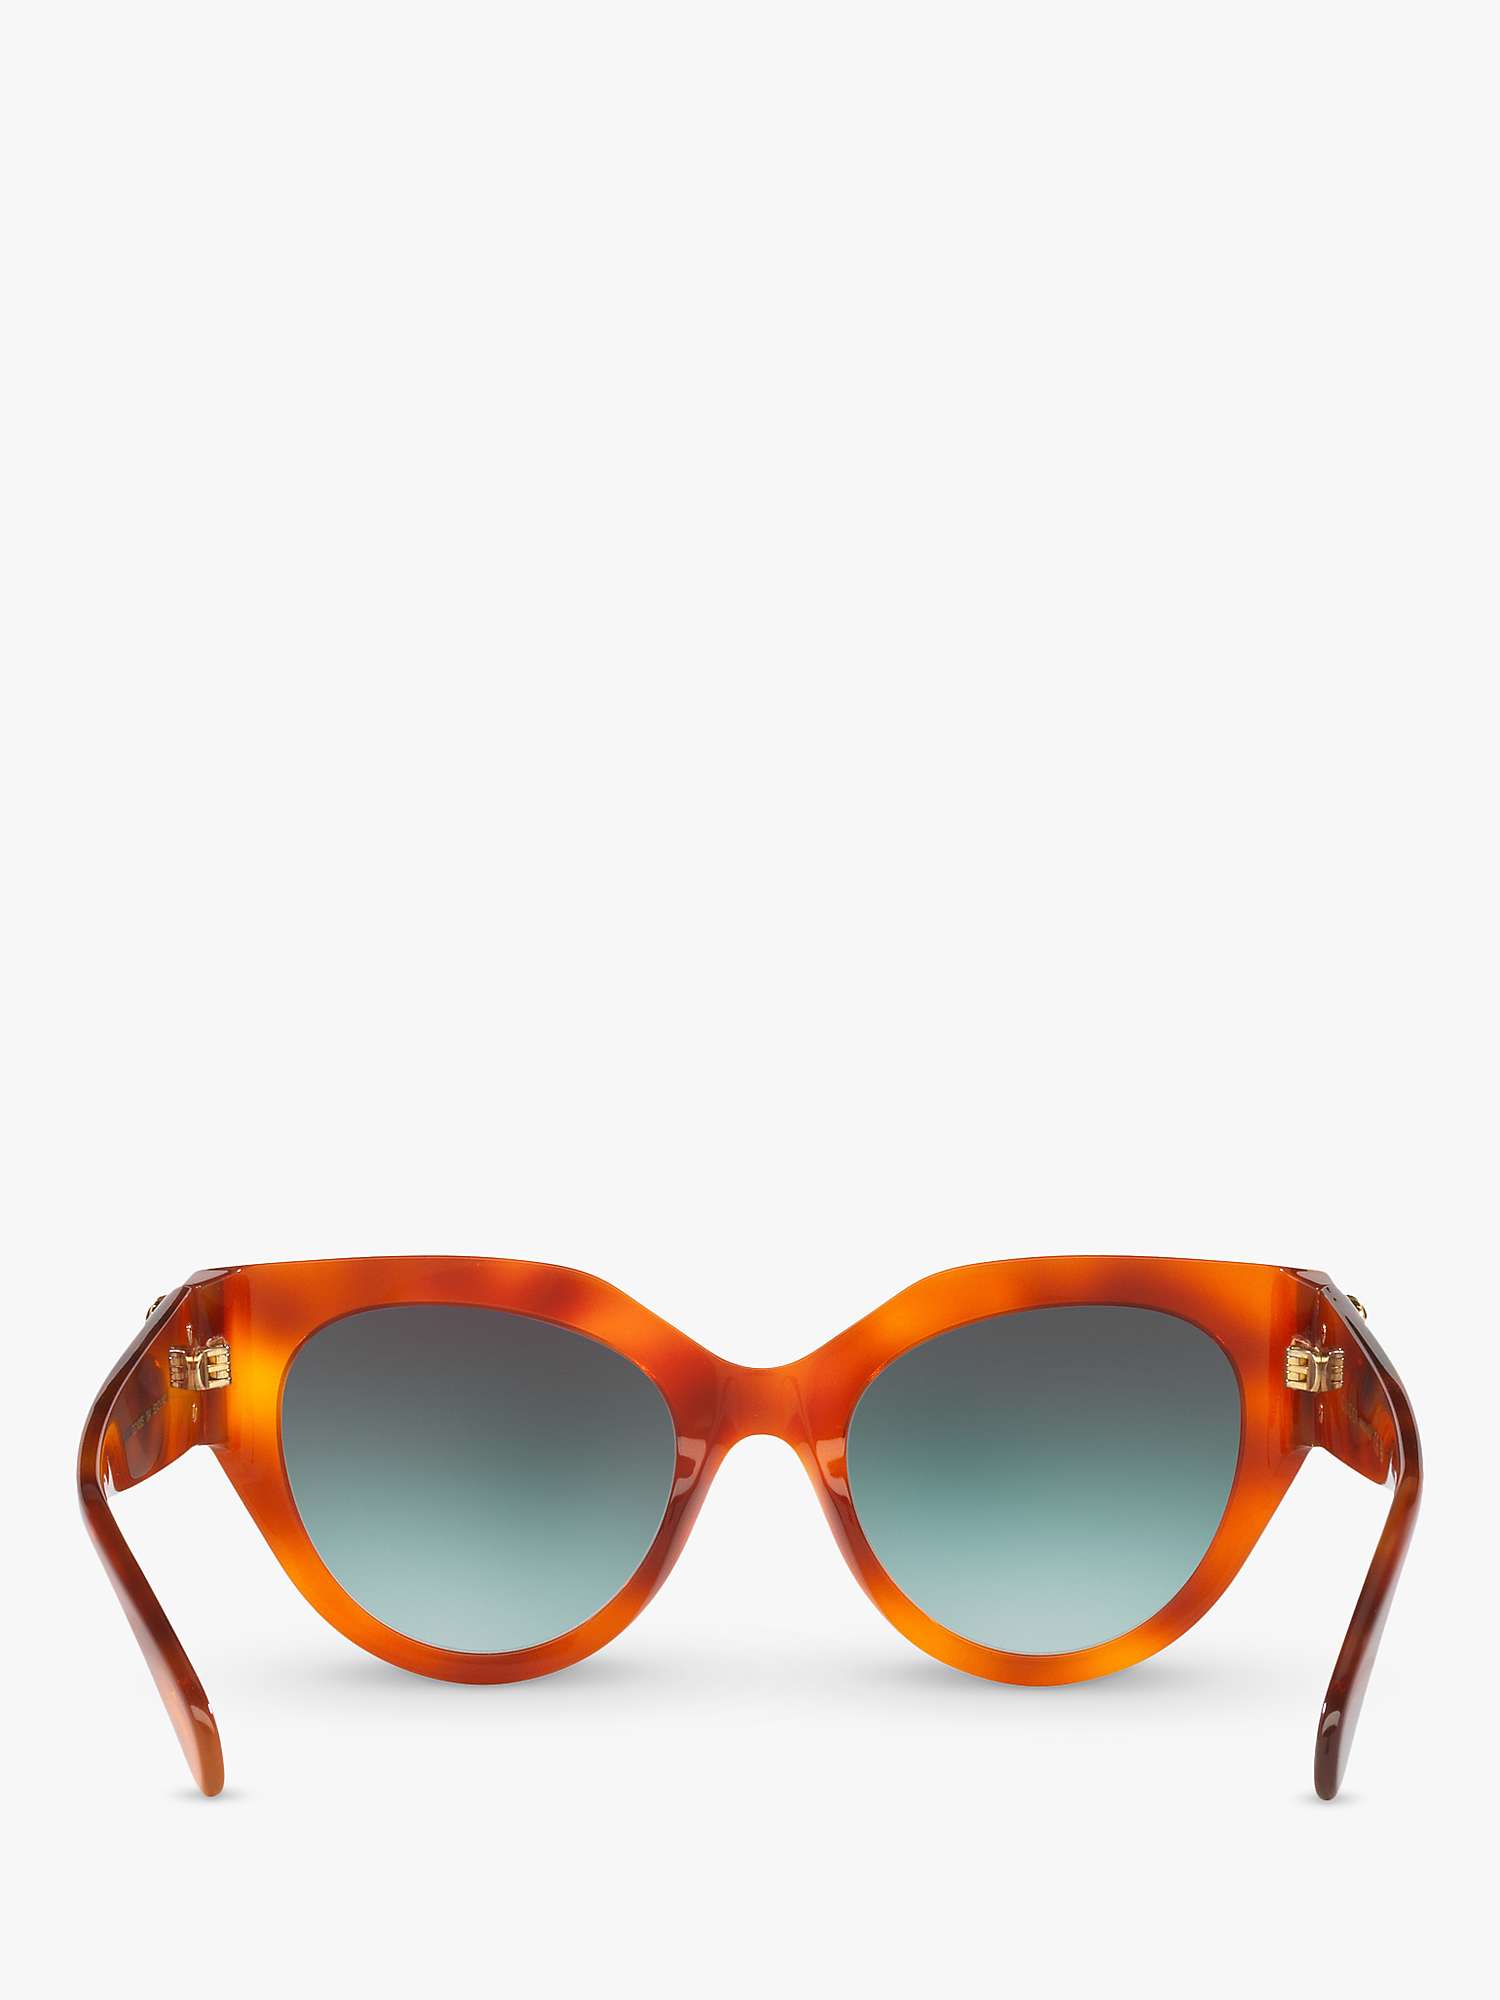 Buy Gucci GG1408S Women's Cat's Eye Sunglasses, Tortoise/Blue Gradient Online at johnlewis.com